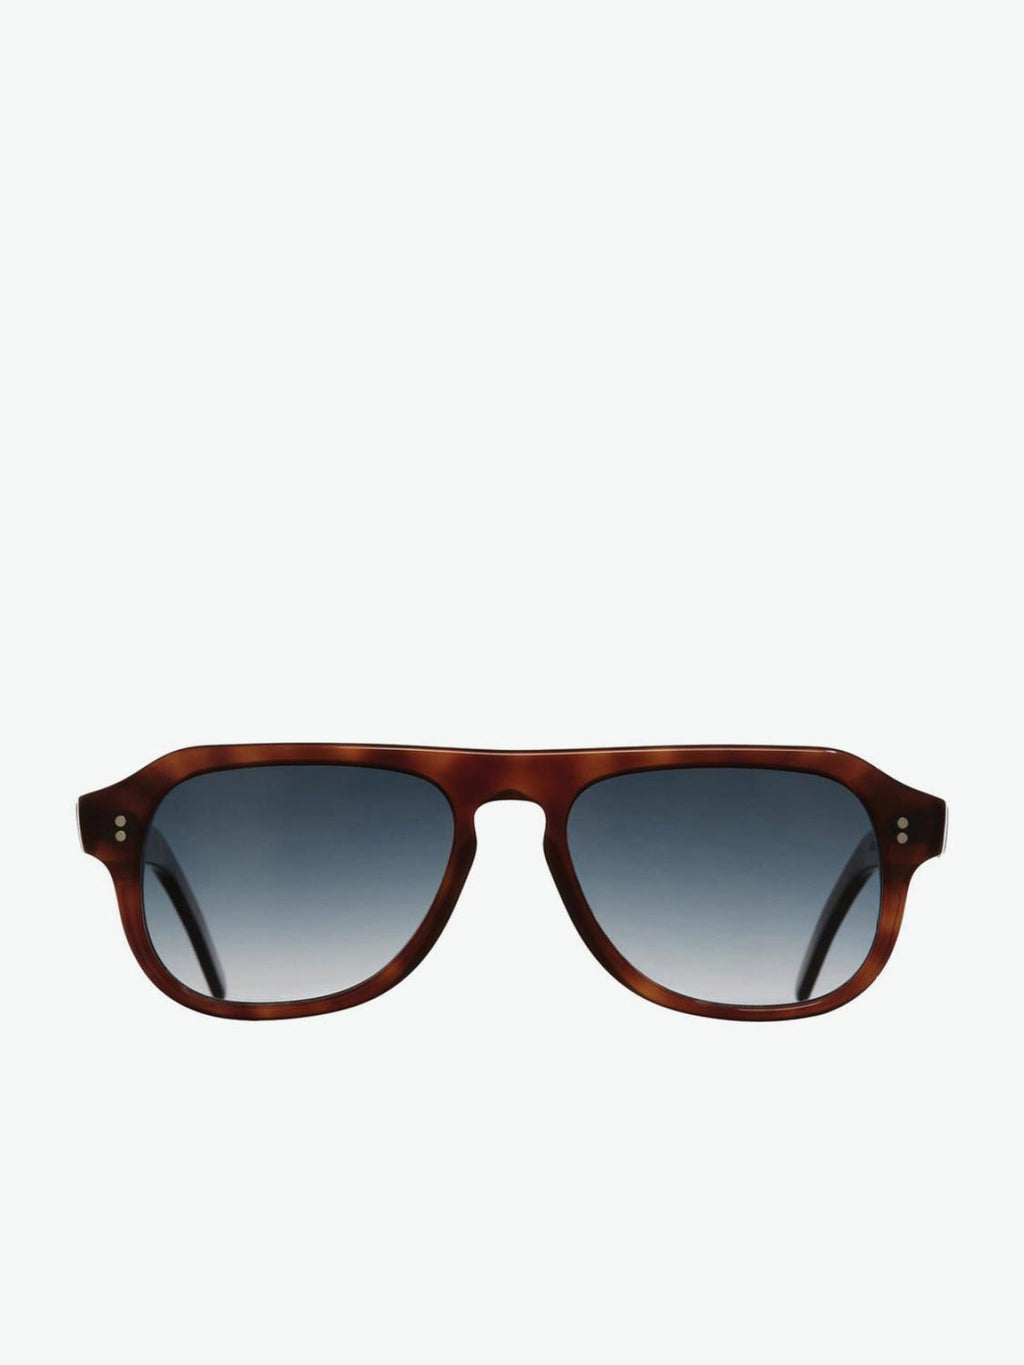 Cutler and Gross Aviator Sunglasses Dark Tortoiseshell | A